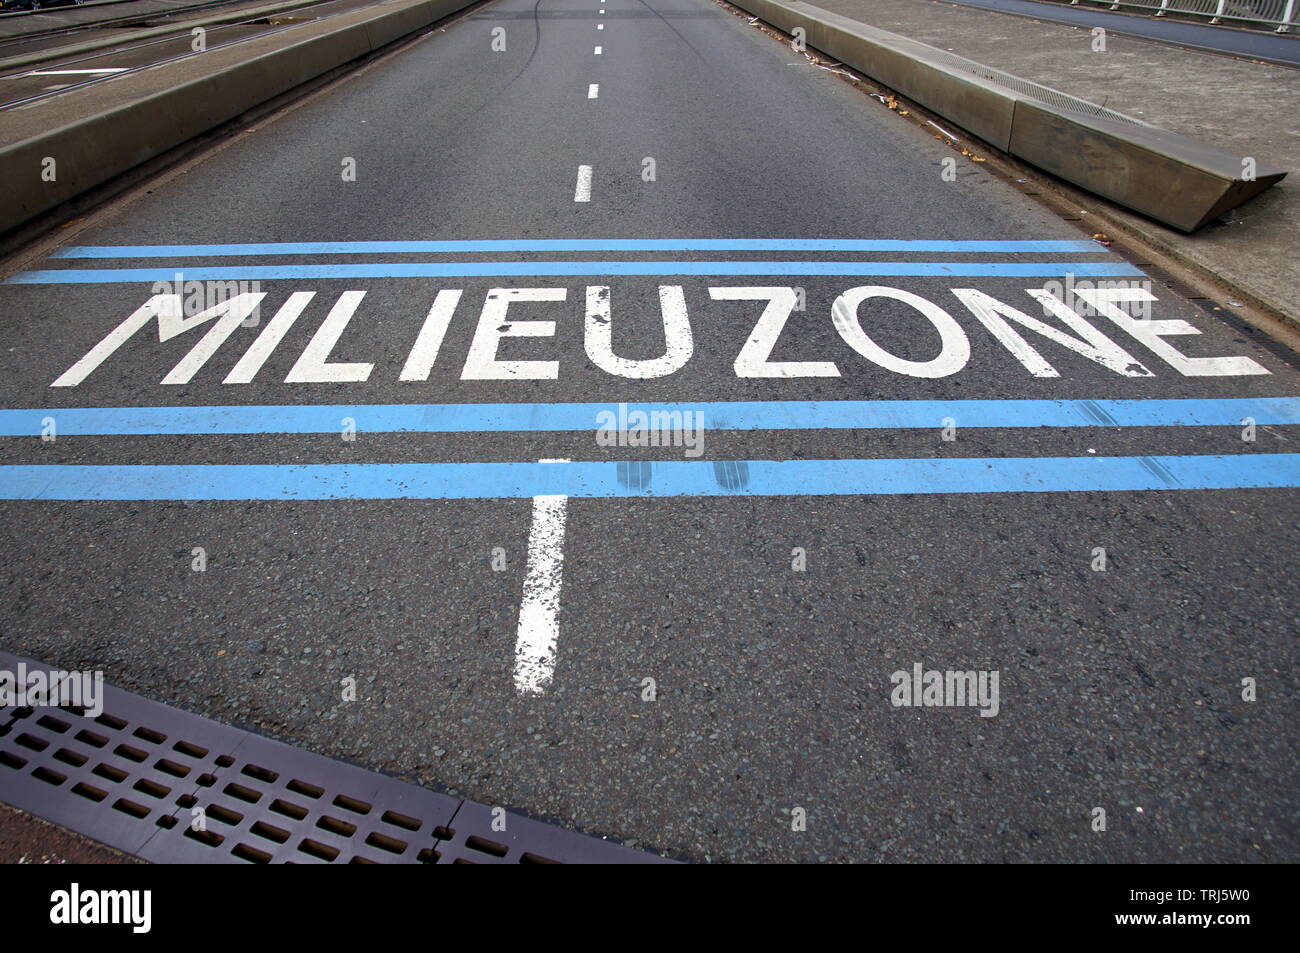 Olandese marcatura stradale annunciando una zona ambientale (Olandese: milieuzone) Foto Stock